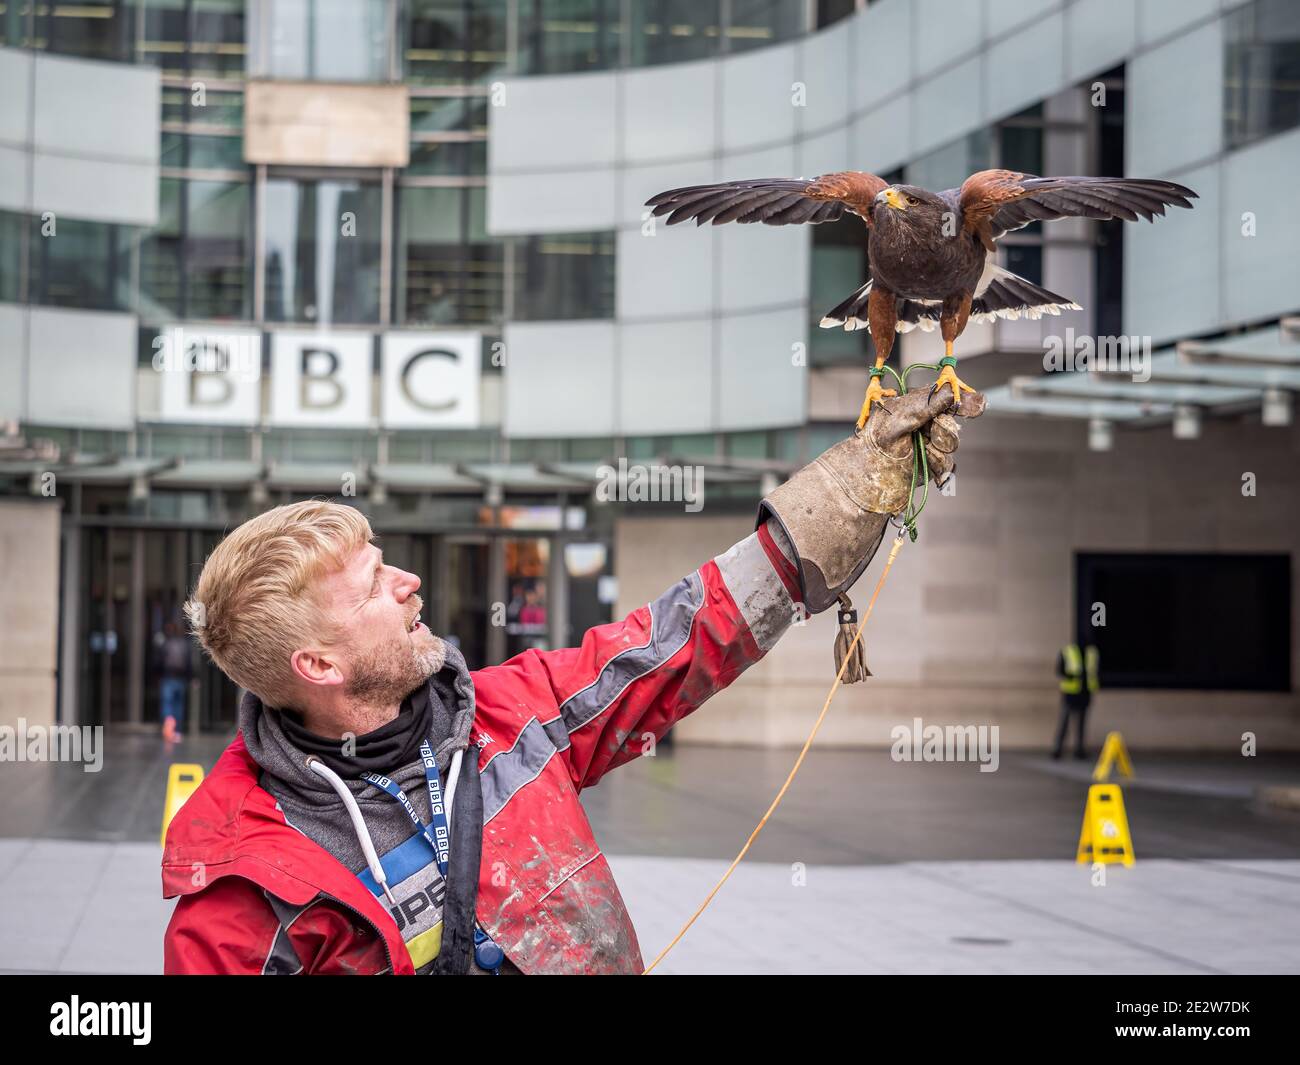 London, UK - January 15, 2021: A Harris's hawk (Parabuteo unicinctus) and its falconer, Matt, outside the BBC's Broadcasting House in Central London. Stock Photo